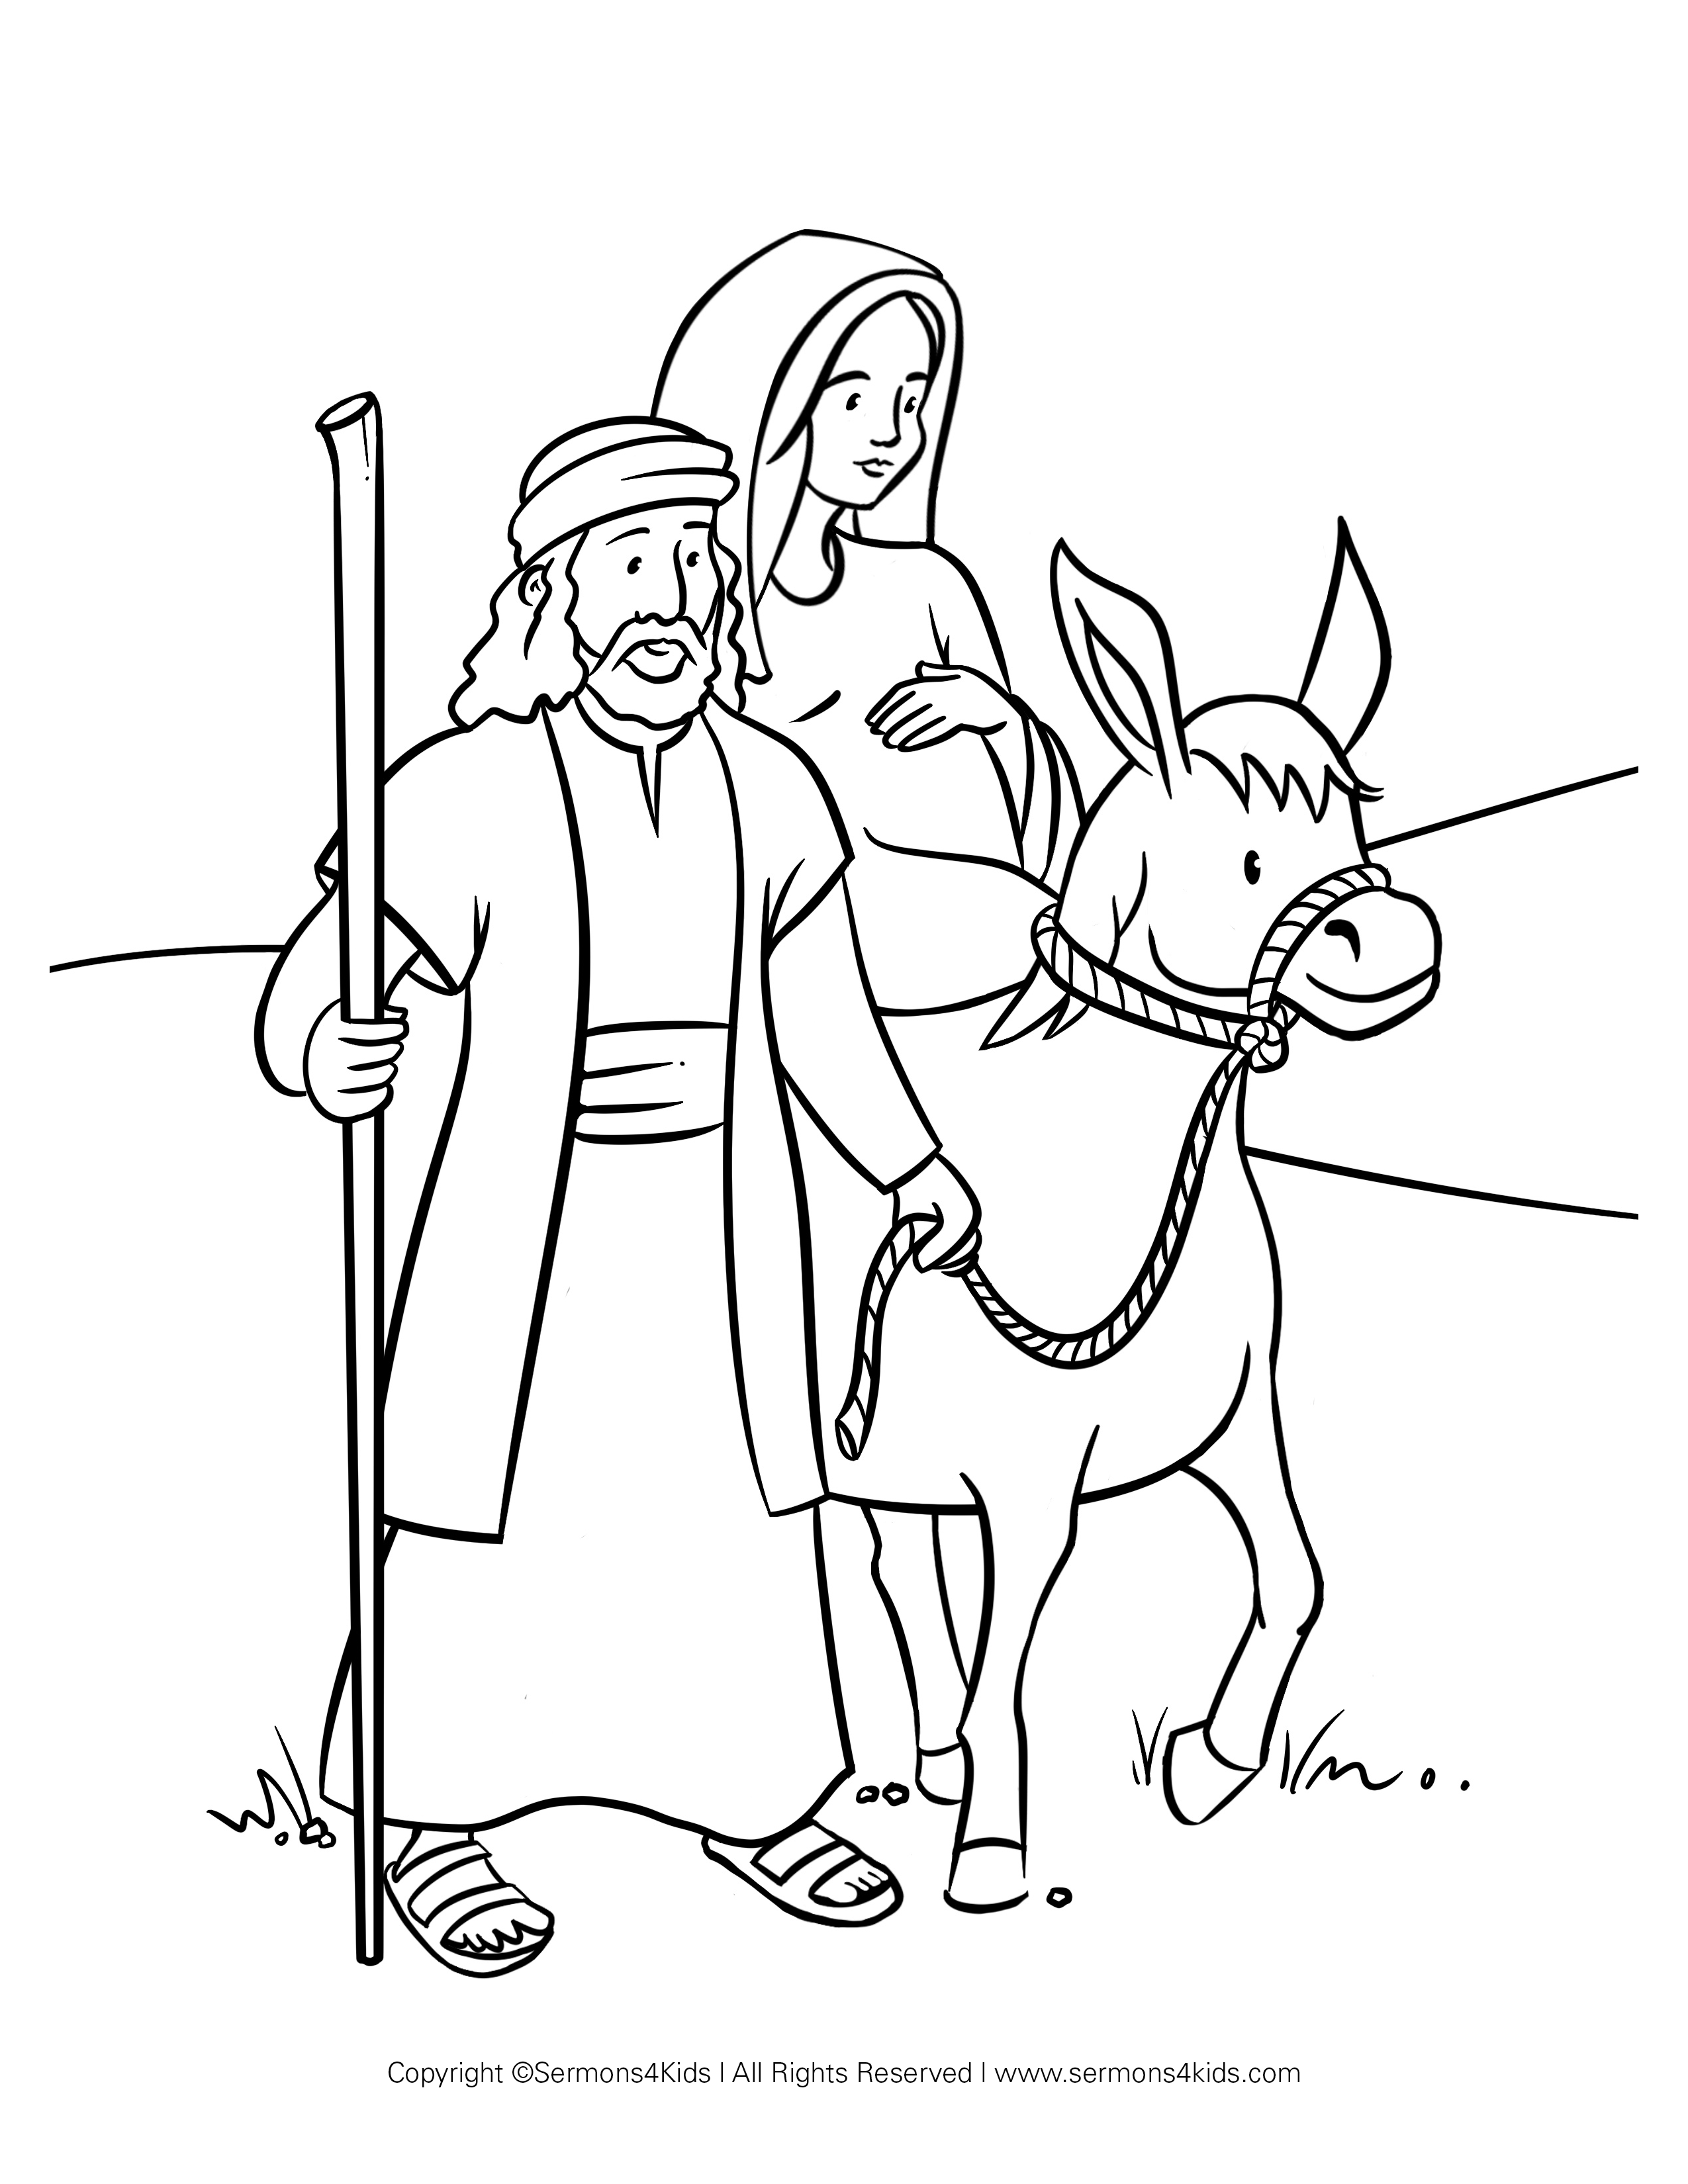 Joseph and Mary Travel to Bethlehem | Children's Sermons from Sermons4...